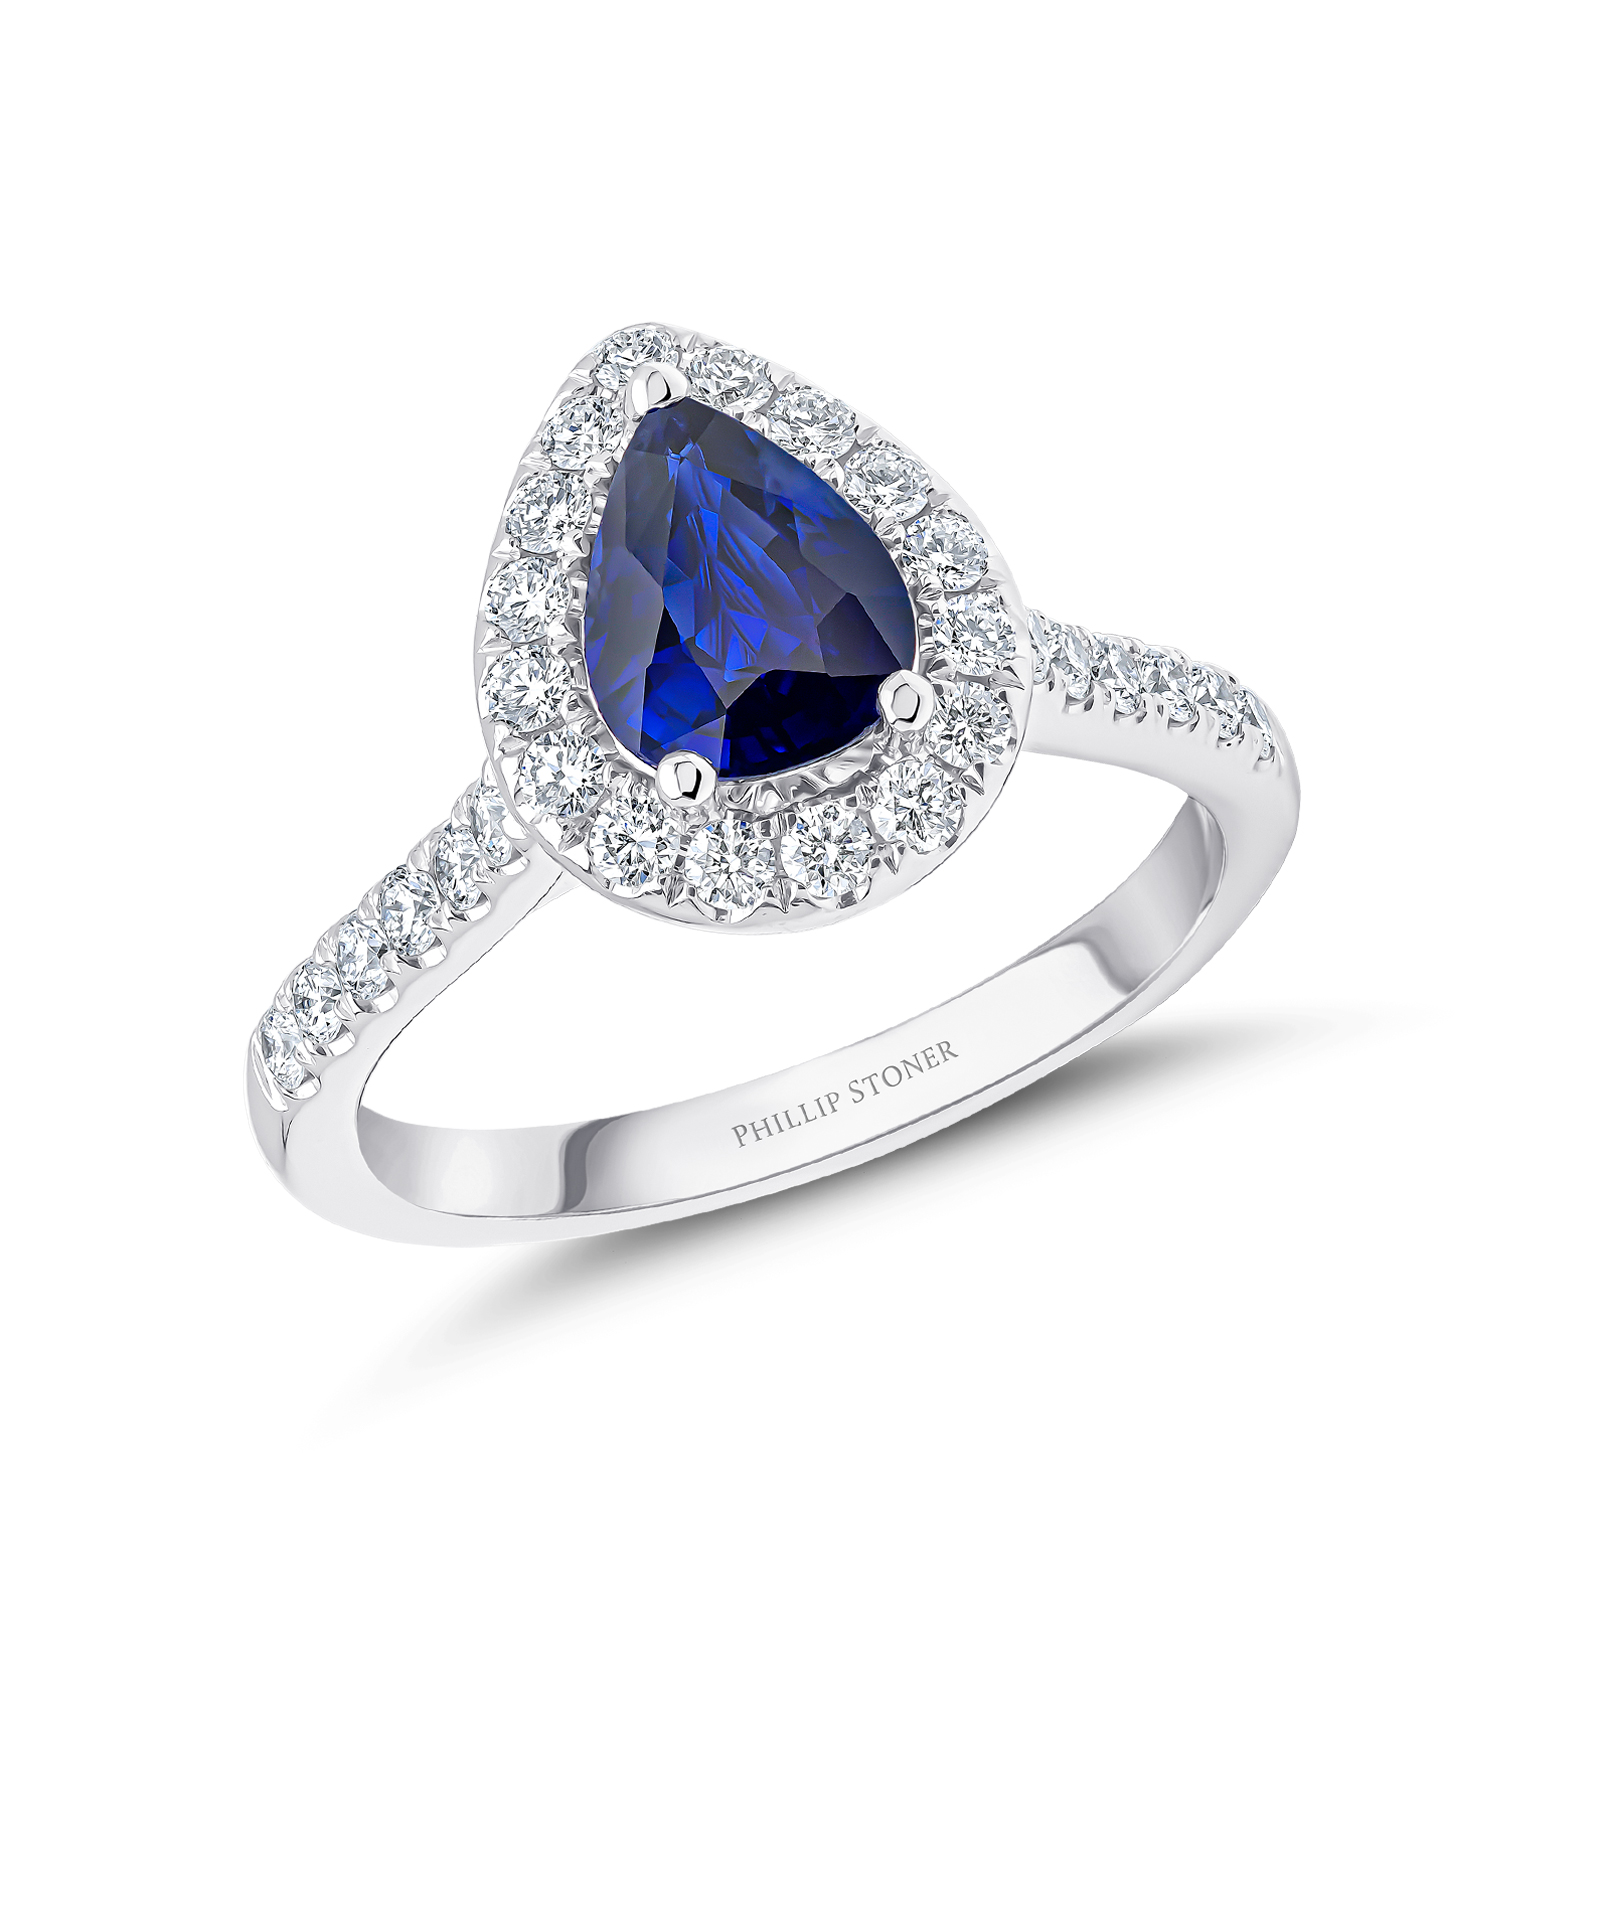 1.30ct Pear Cut Sapphire & Diamond Cluster RIng - Phillip Stoner The Jeweller